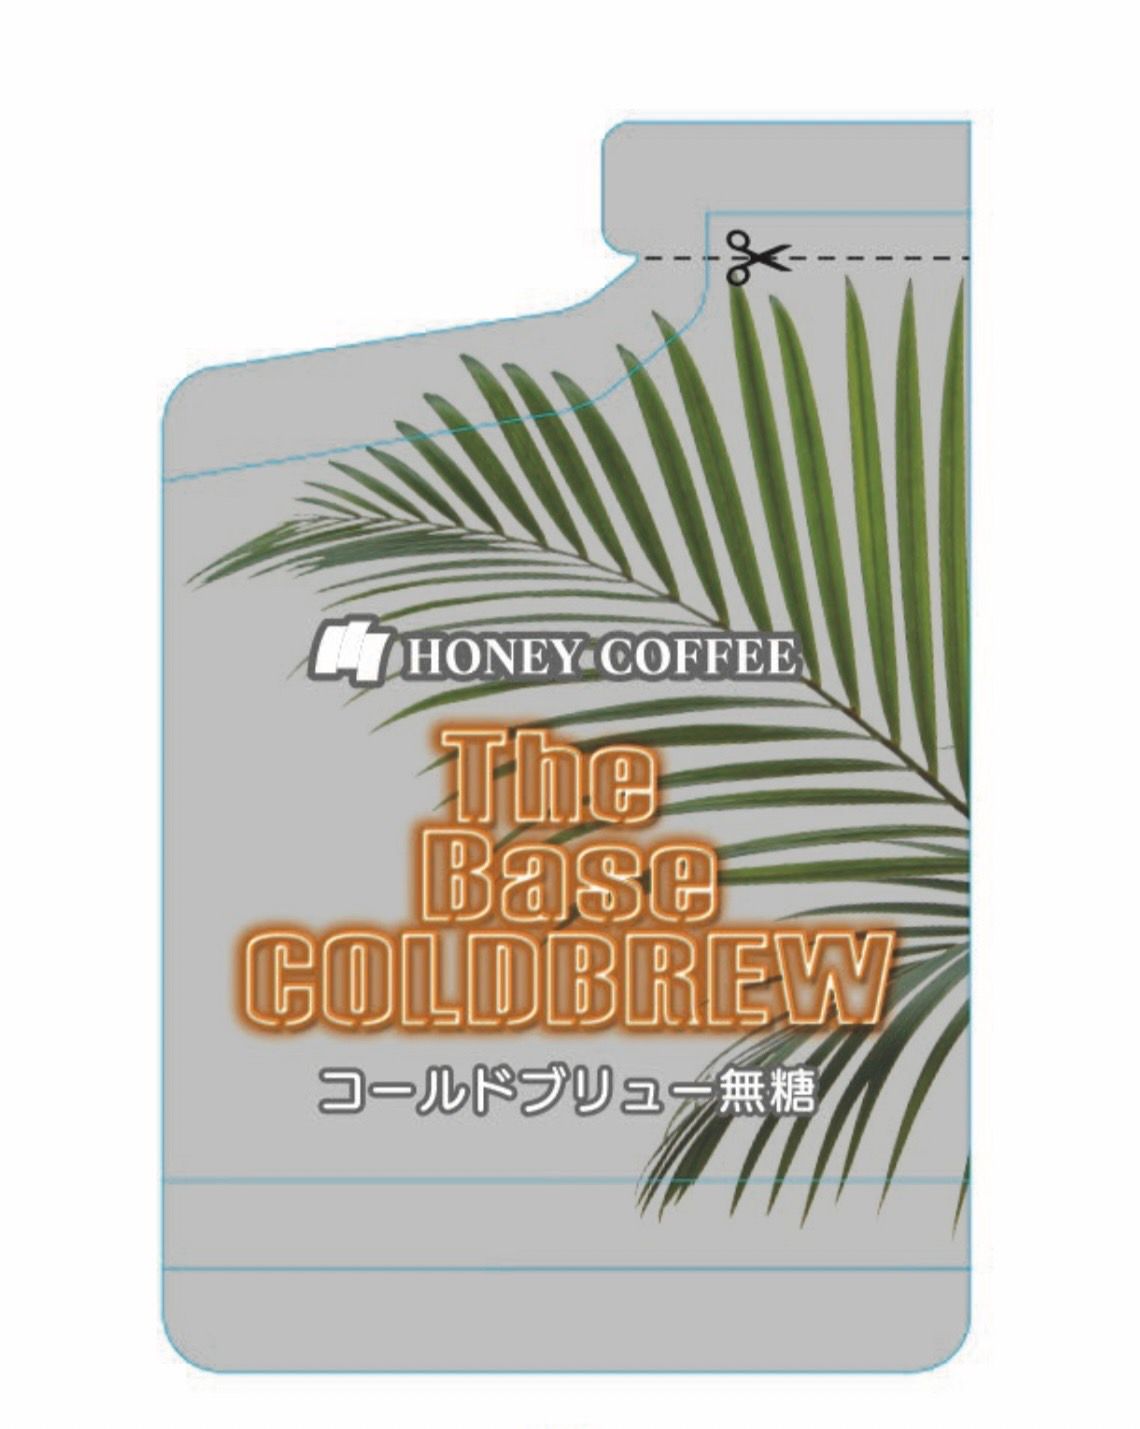 Honey Coffee Co., Ltd.